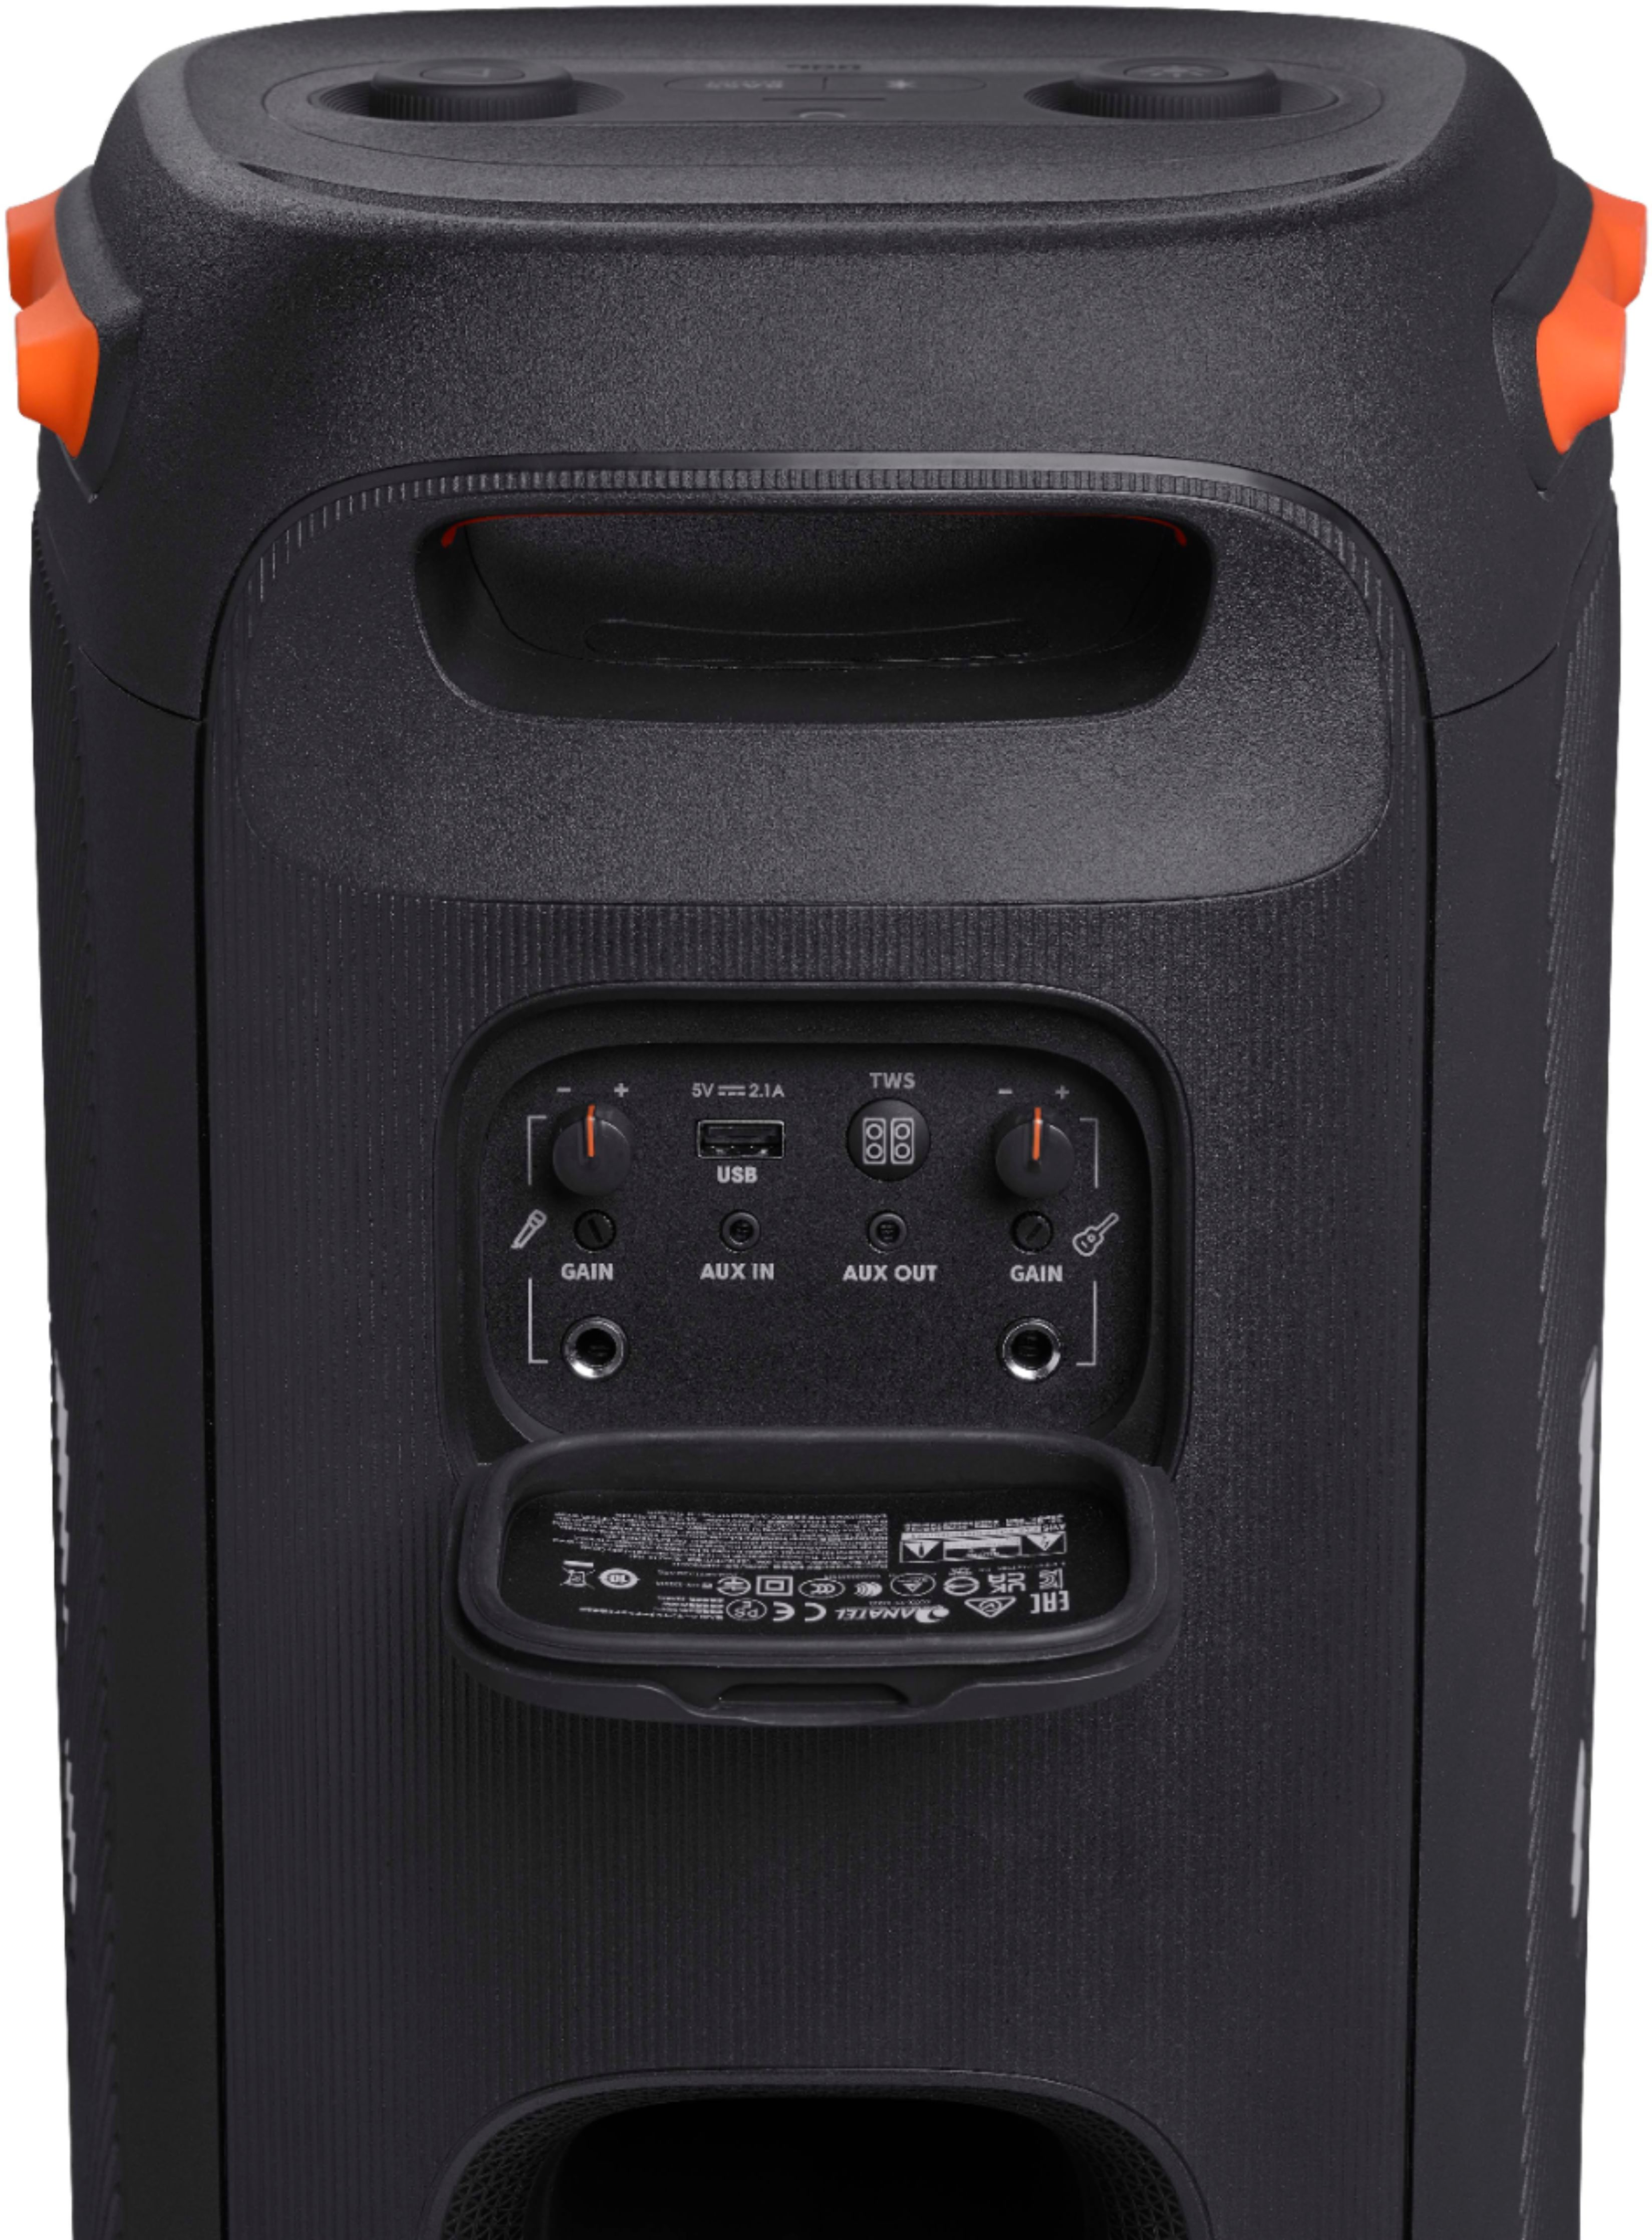 JBL Party Box 710 Portable Party Speaker Black JBLPARTYBOX710AM - Best Buy